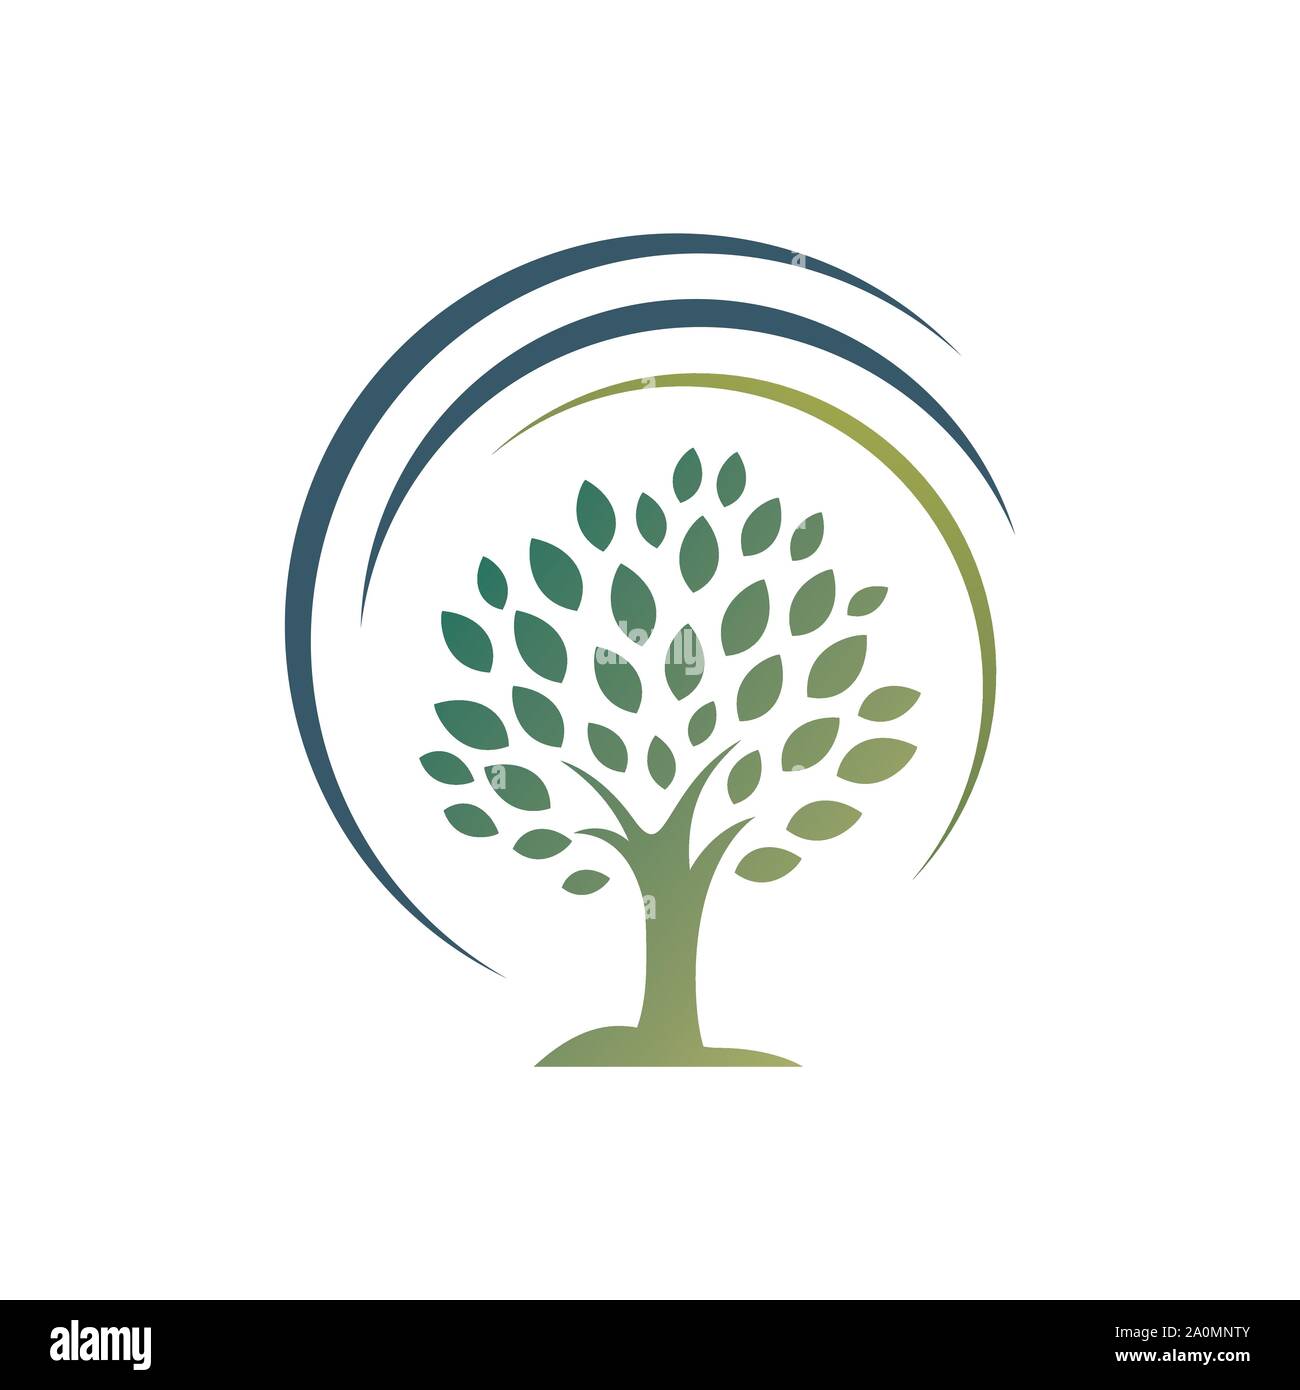 silhouette tree logo vector graphics elements concept Stock Vector